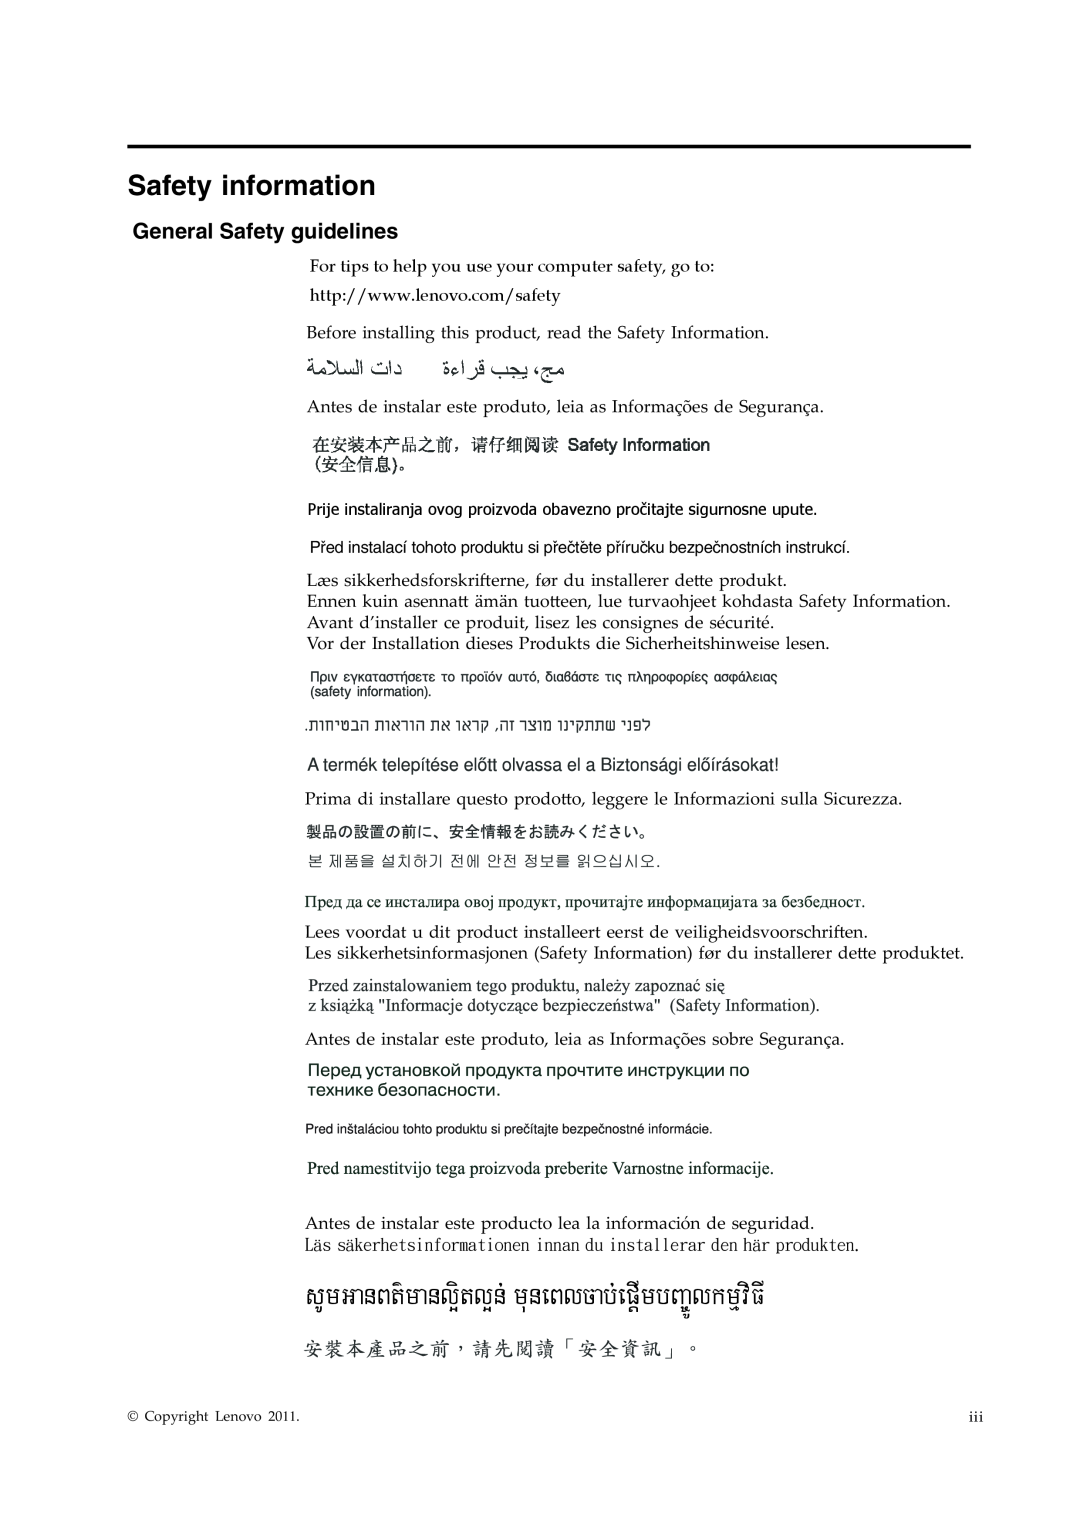 Lenovo 1452DB6 manual sUmGanBt’manli¥tl¥n muneBlcab epIþmbBaÚlkmμviFI, 3AFETY INFORMATION, General Safety guidelines 